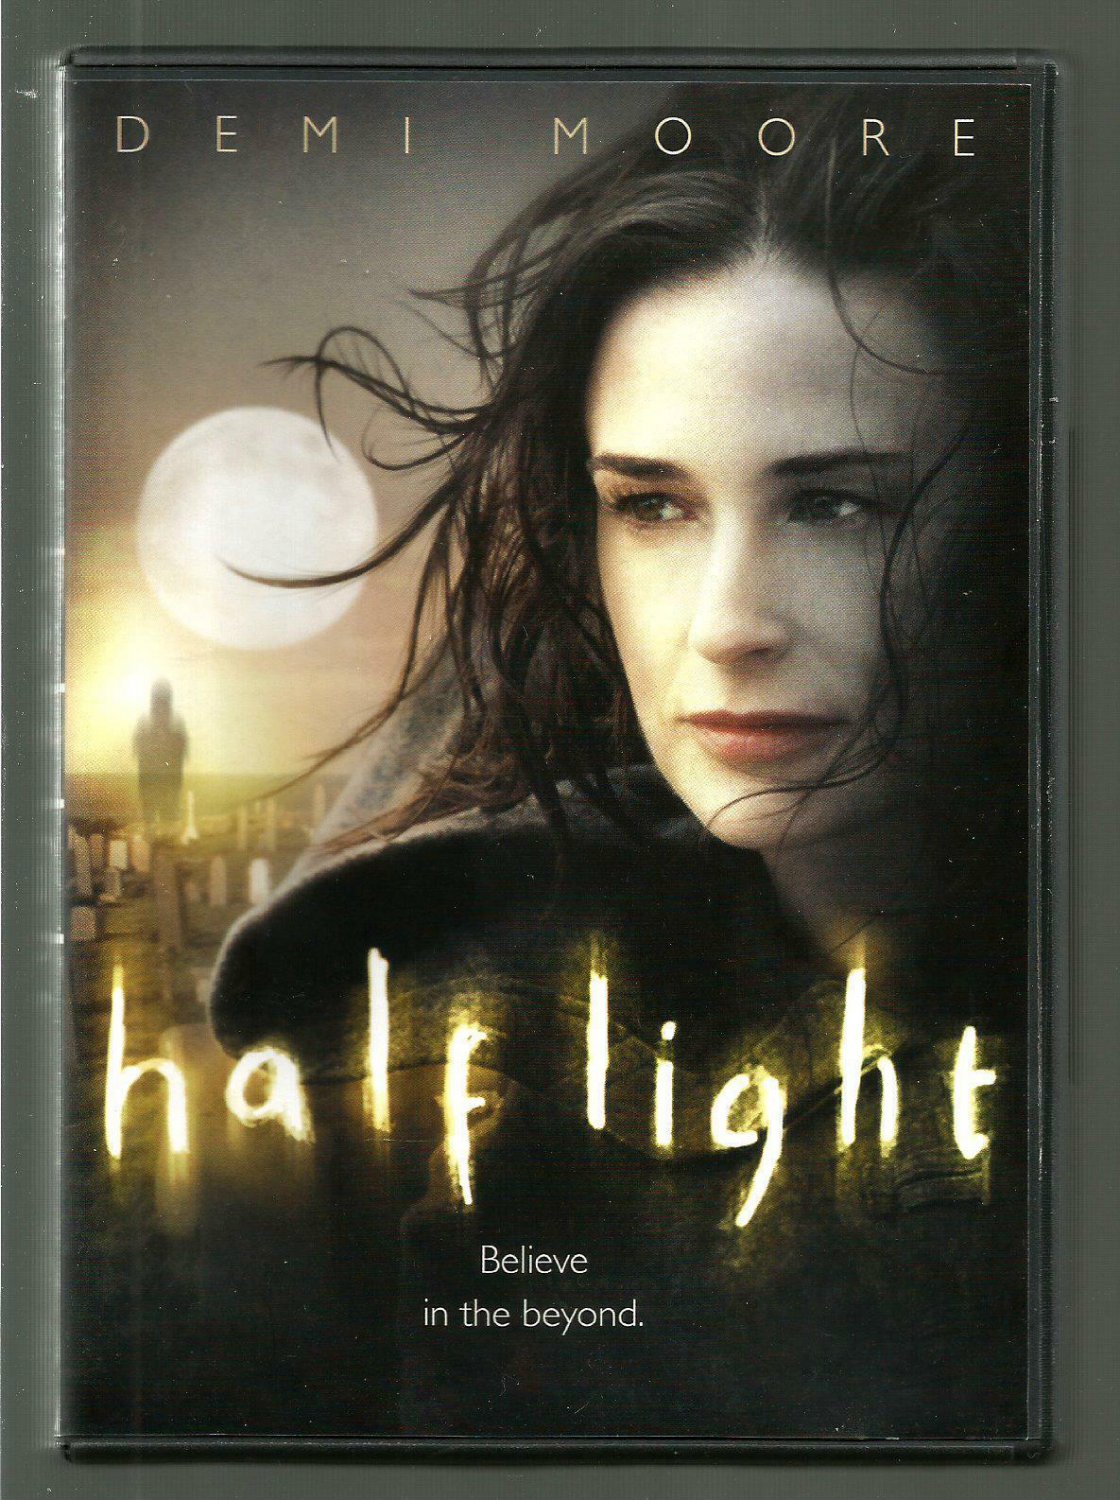 DEMI  MOORE  *  Half Light  *  (DVD, 2006)  WIDESCREEN